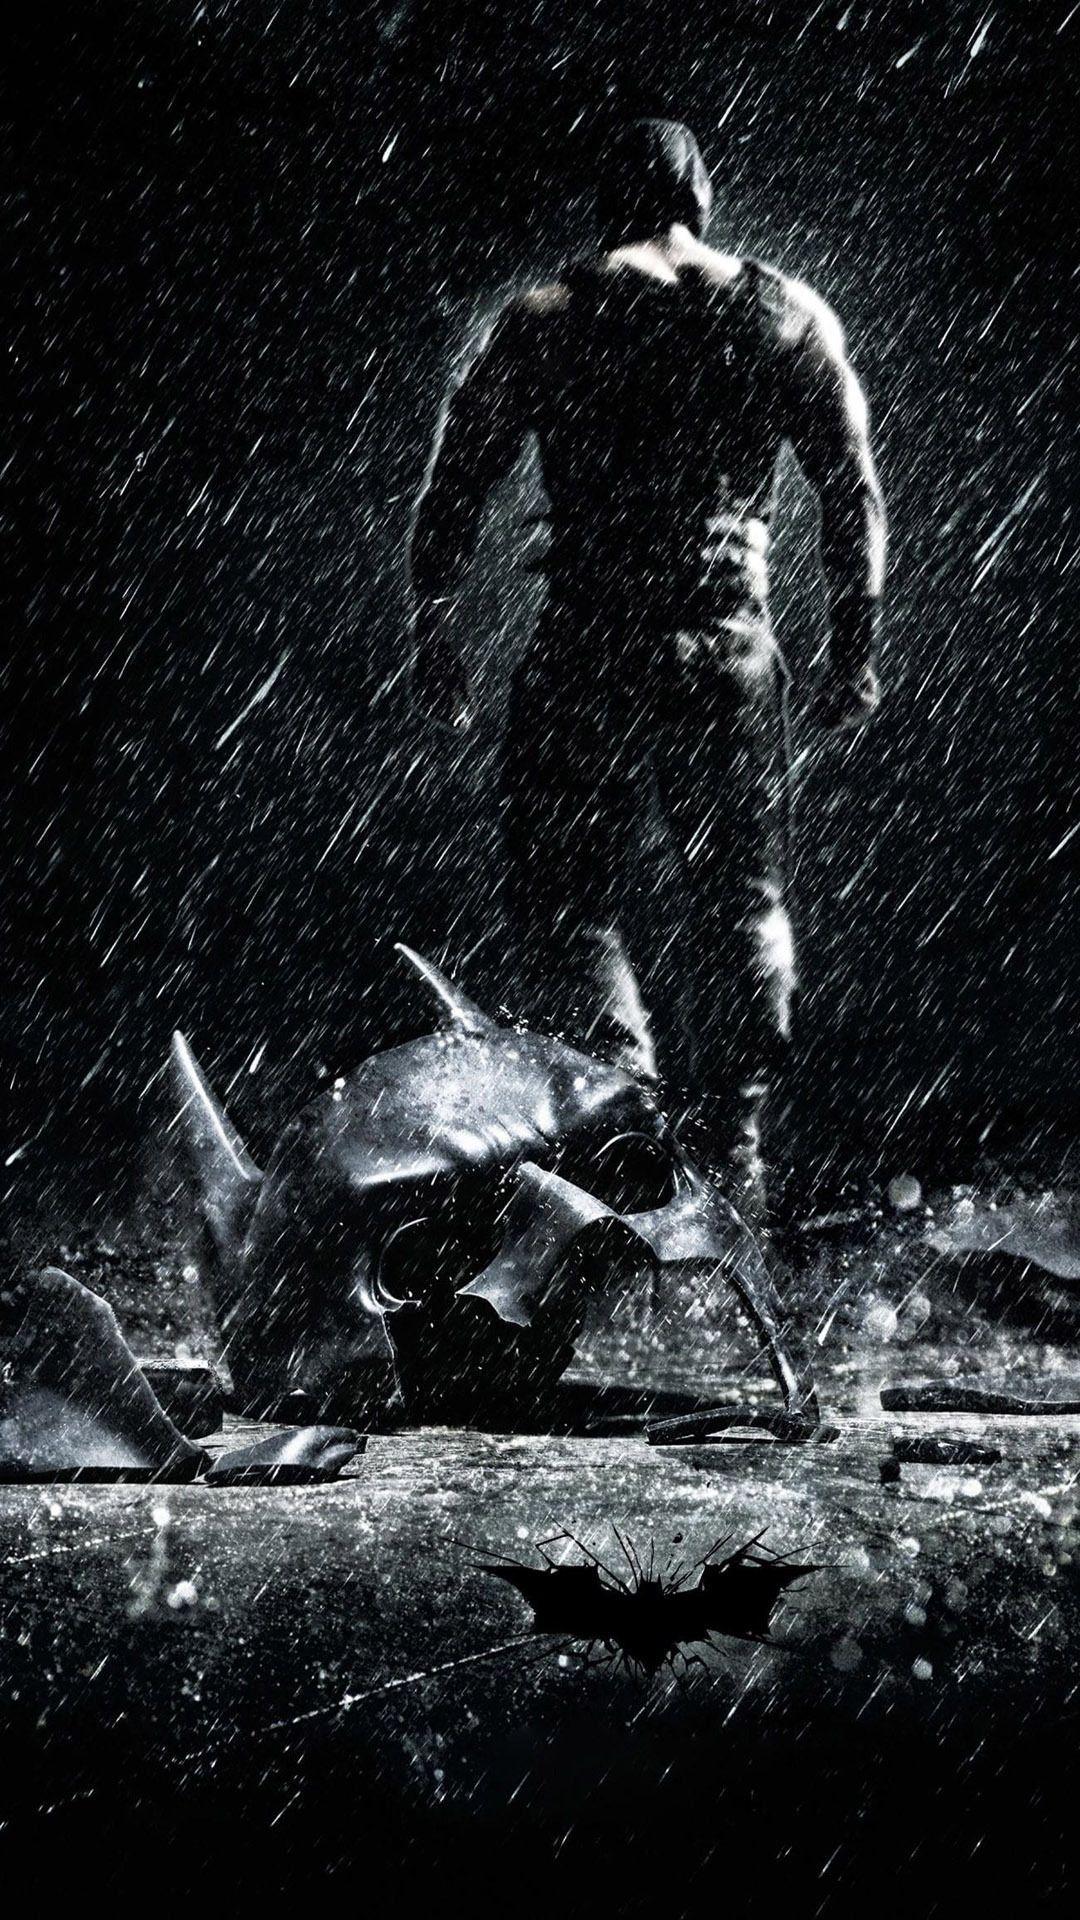 Bane Dark Knight Rises Mobile Wallpaper 12804. Dark phone wallpaper, Dark knight wallpaper, Batman wallpaper